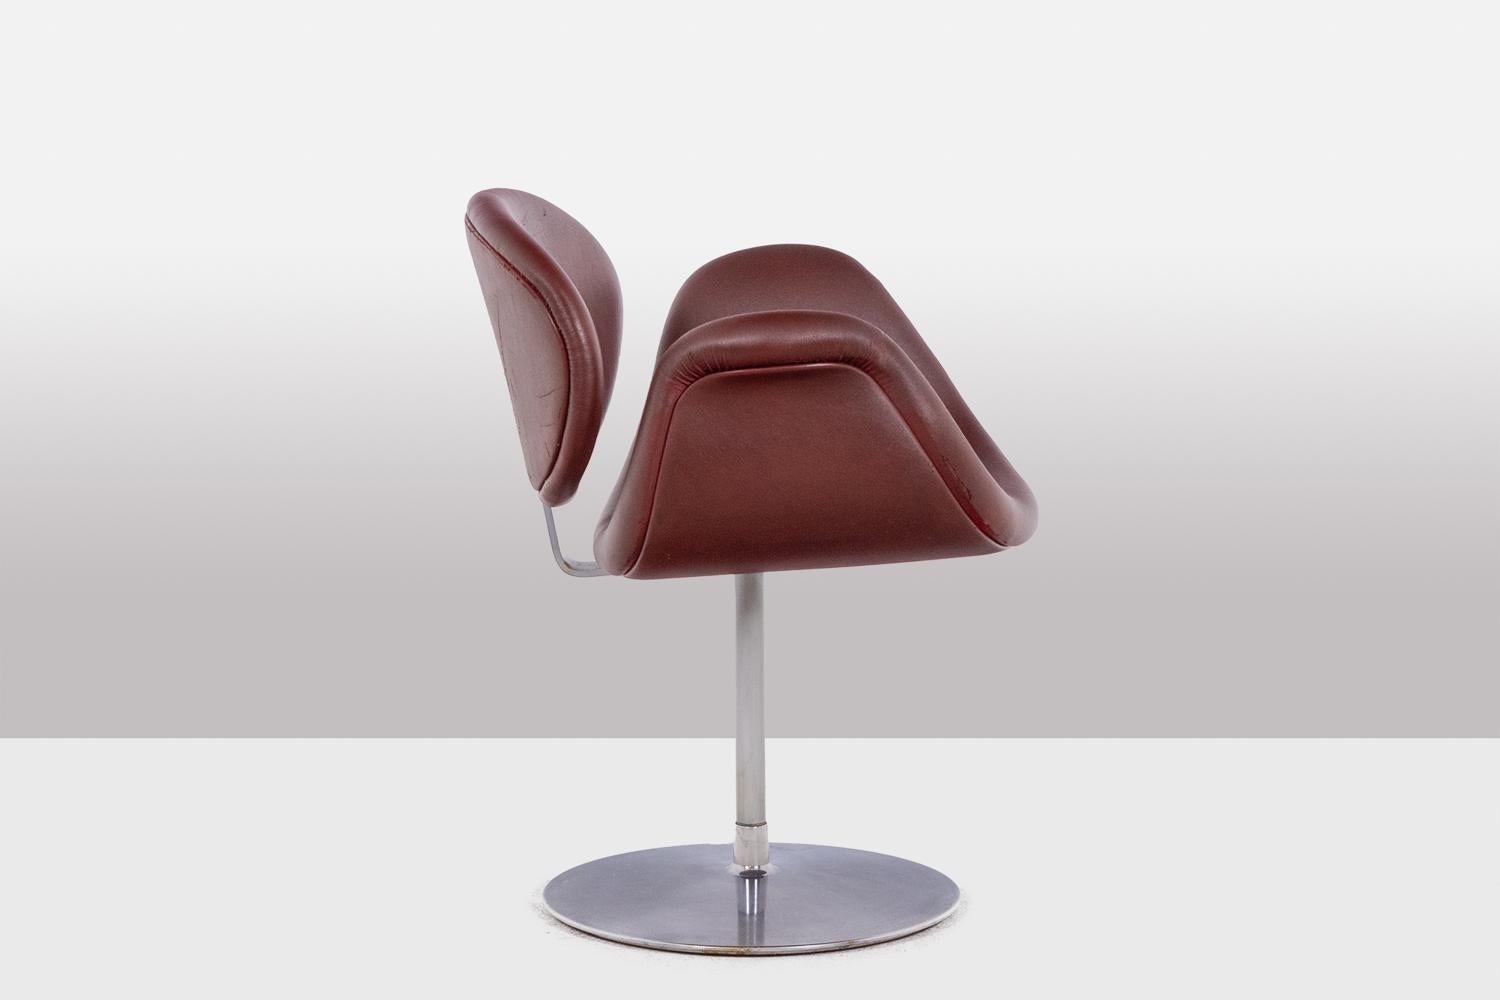 European Pierre Paulin for Artifort. “Tulip” armchair. 1980s. For Sale